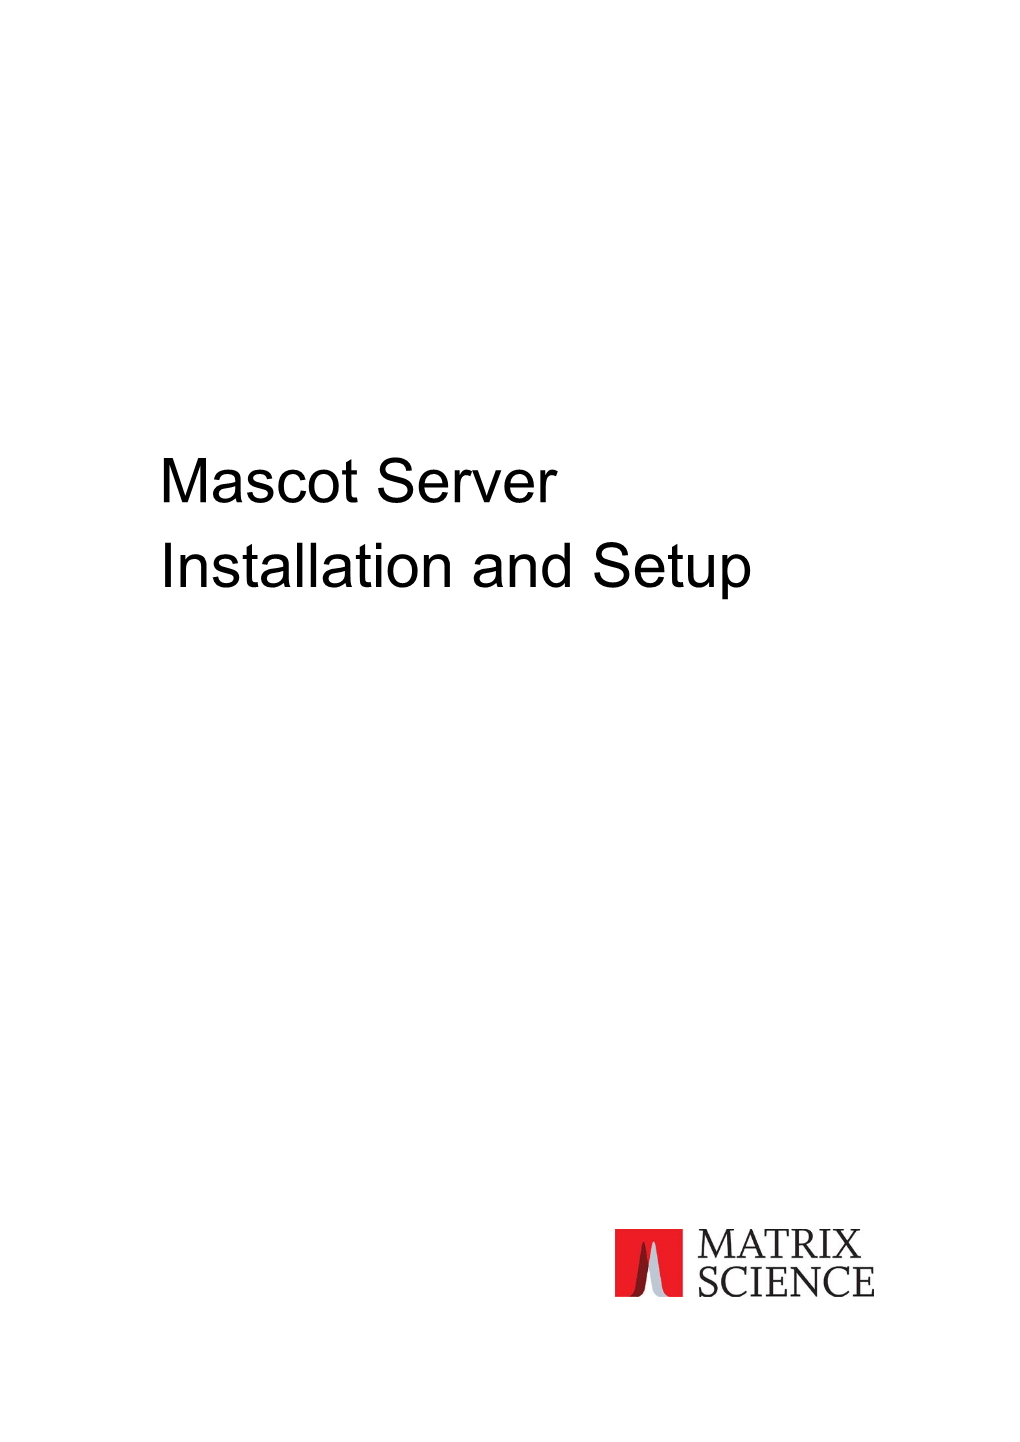 Mascot Server Installation and Setup